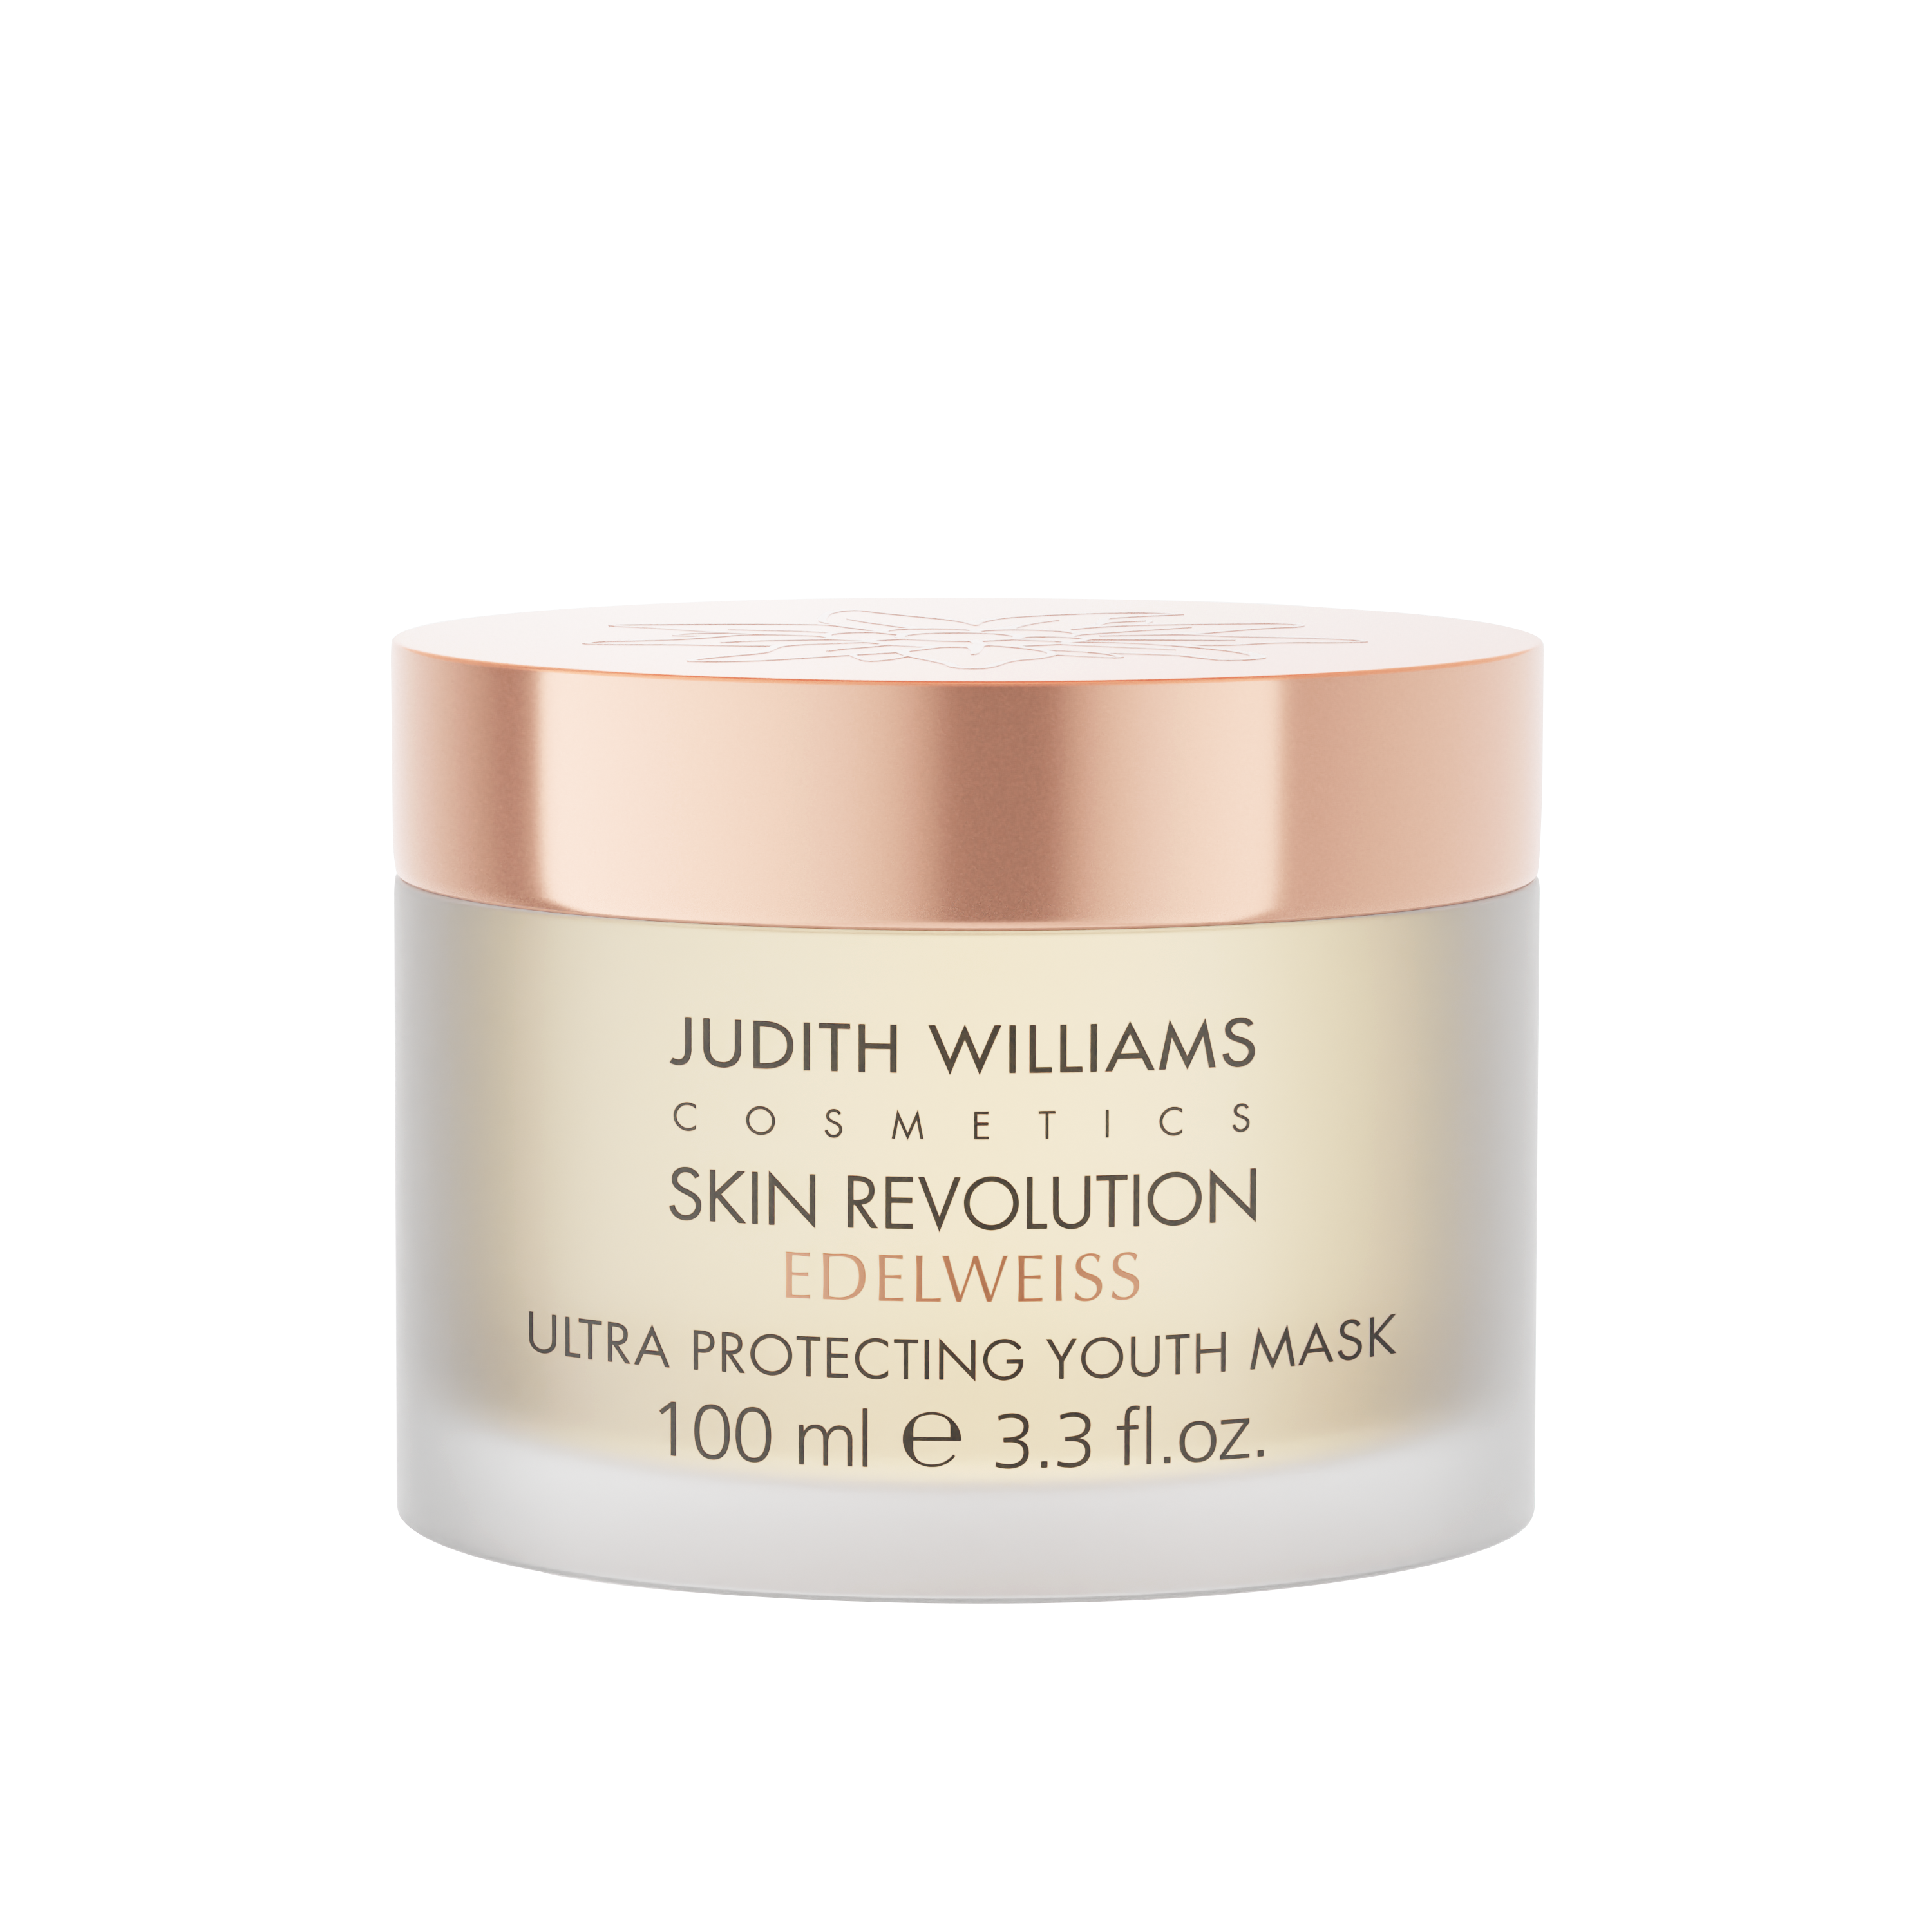 Gesichtsmaske | Skin Revolution Edelweiss | Ultra Protecting Youth Mask | Judith Williams